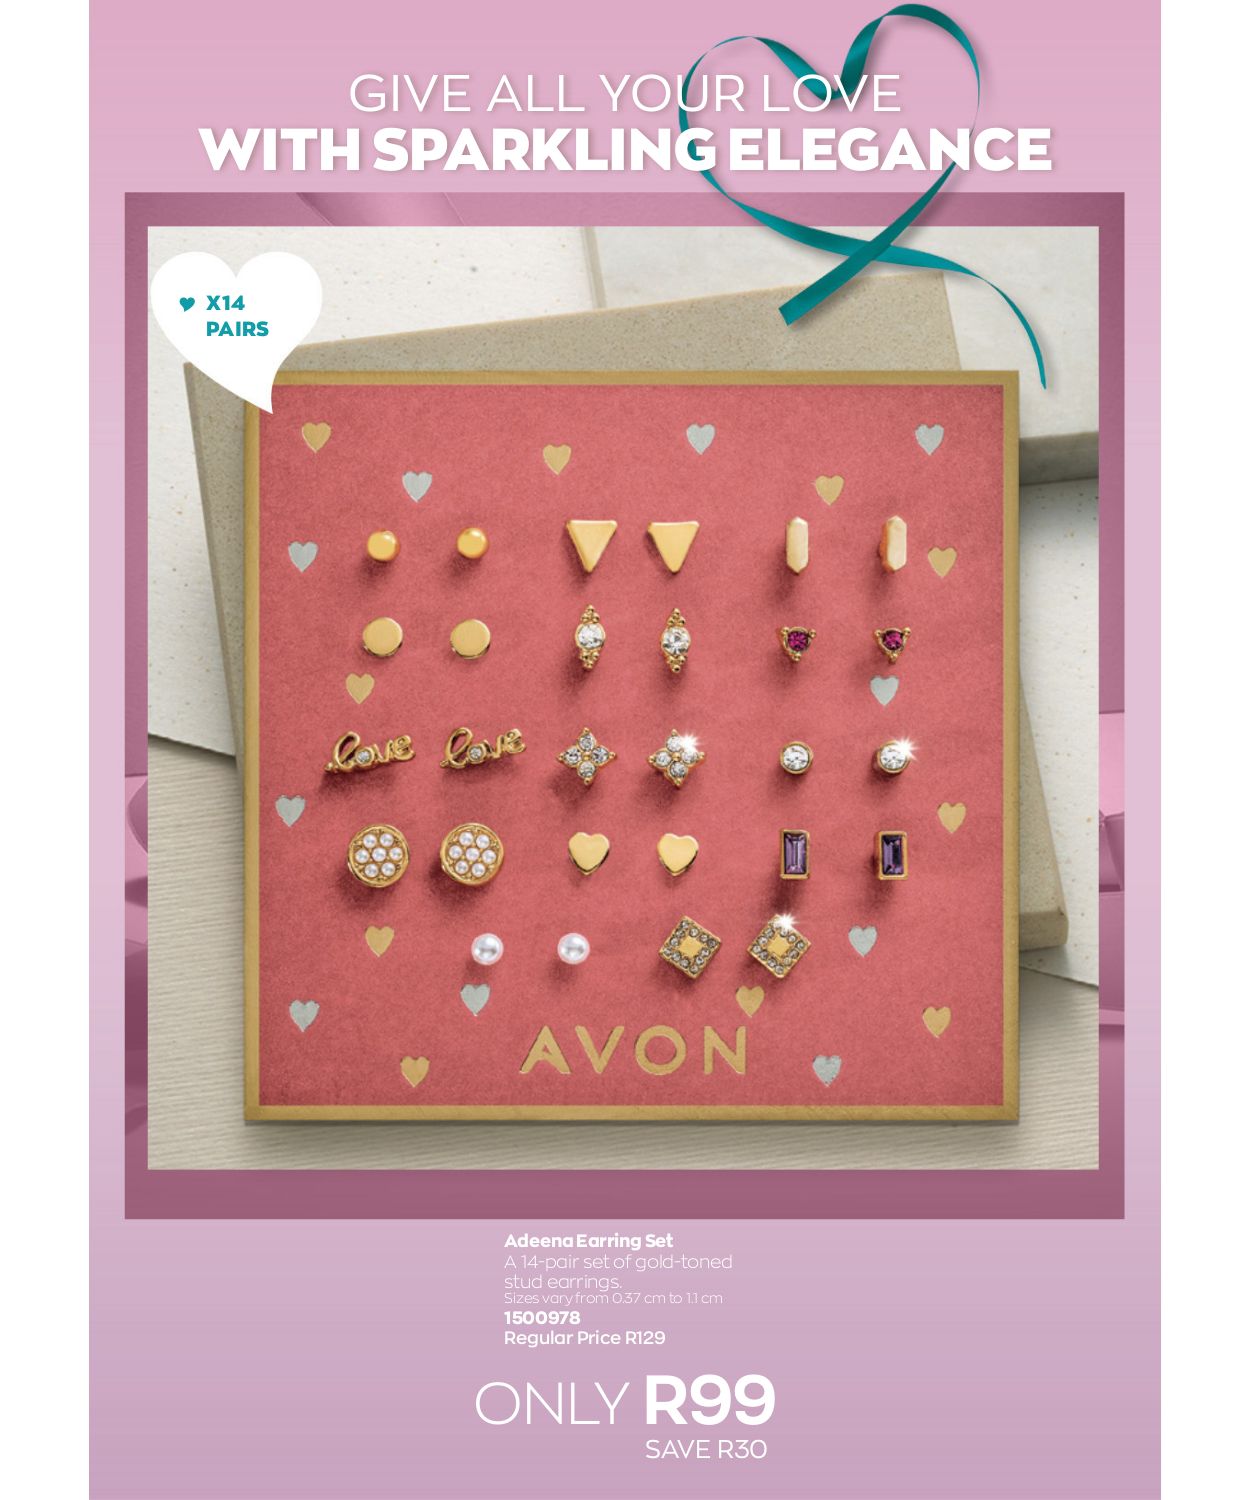 Avon Catalogue from 2023/06/01